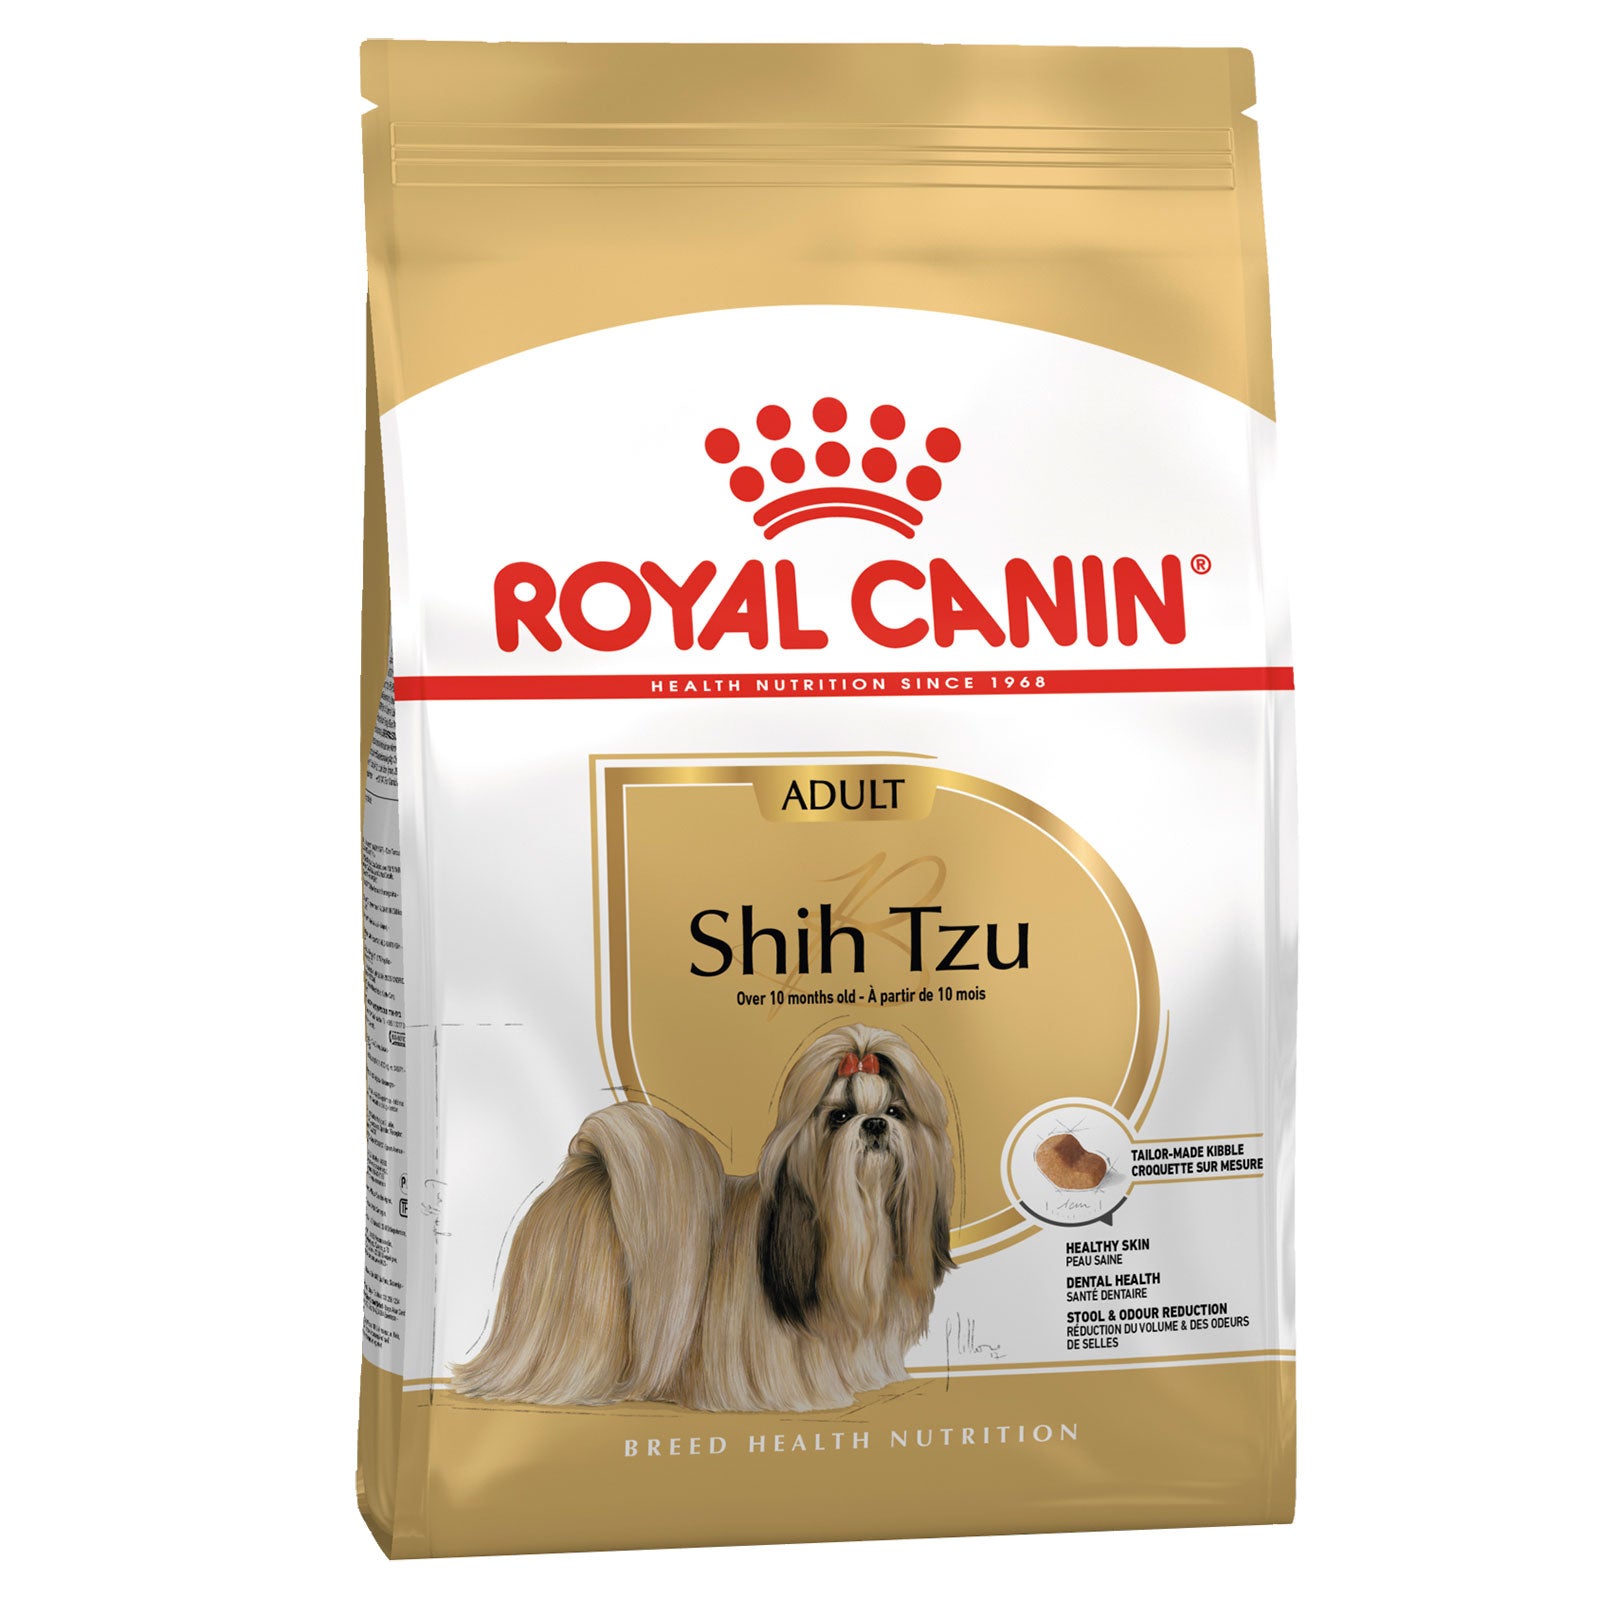 Royal Canin Dog Food Adult Shih Tzu